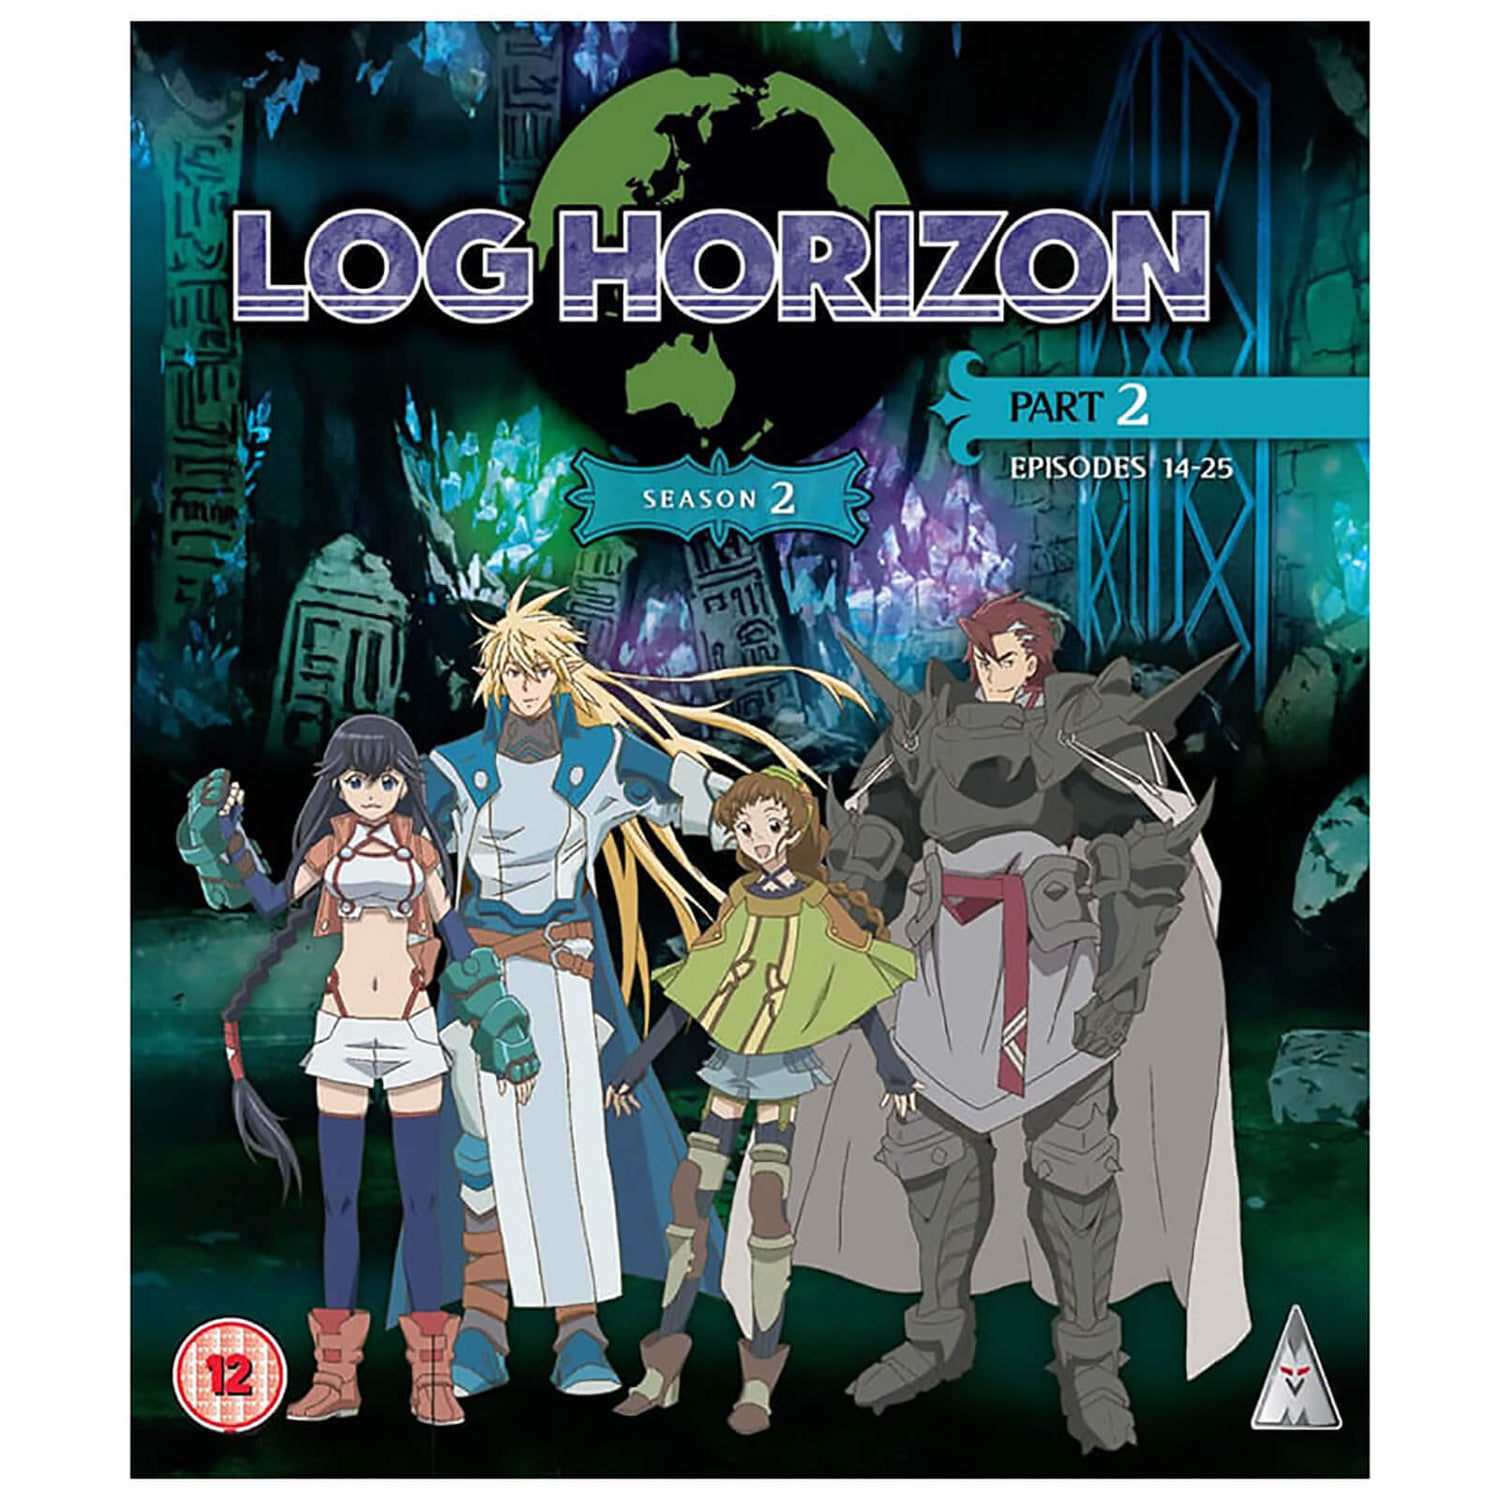 Log Horizon: Season 2 - Part 2